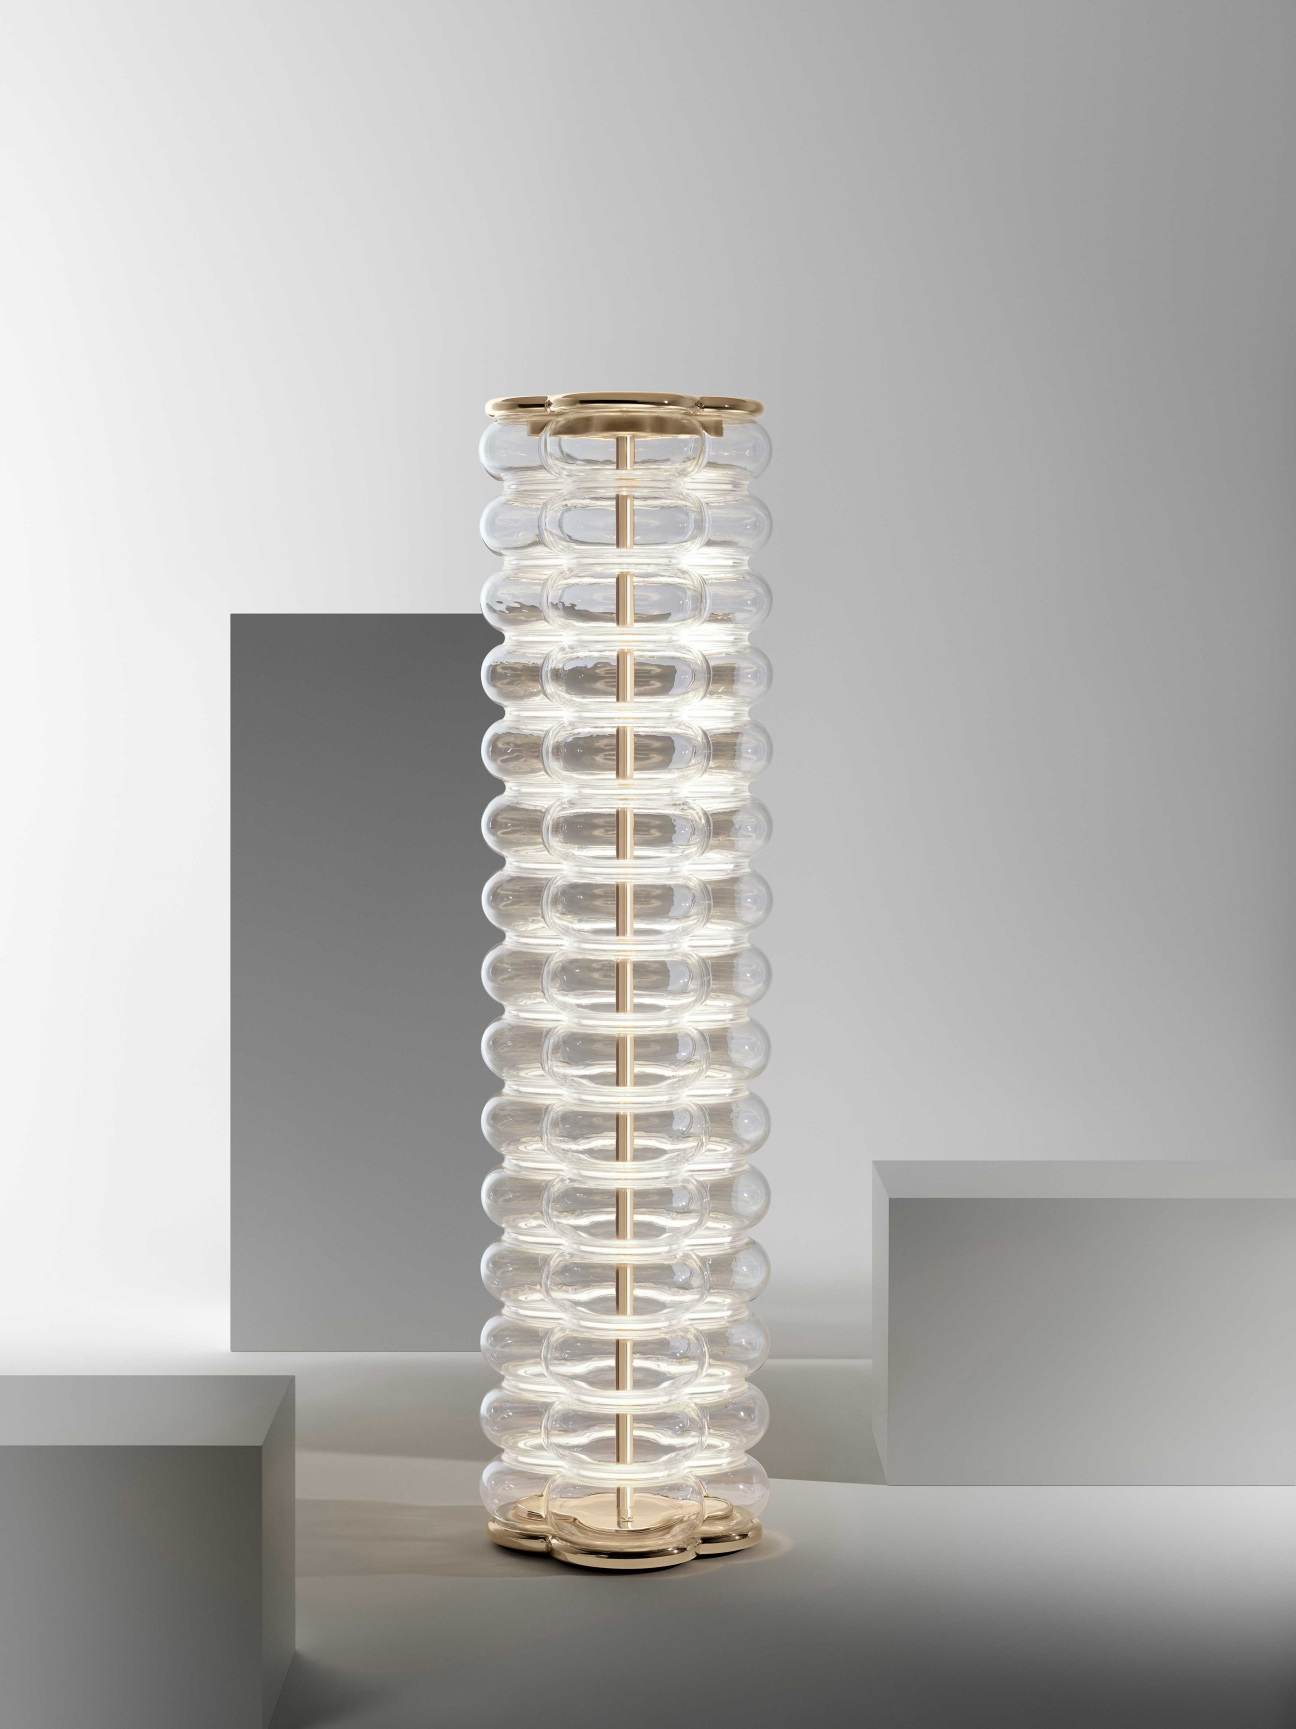 atelier-biagetti-flower-tower-louis-vuitton-objets-nomades-furniture-light-sculpture